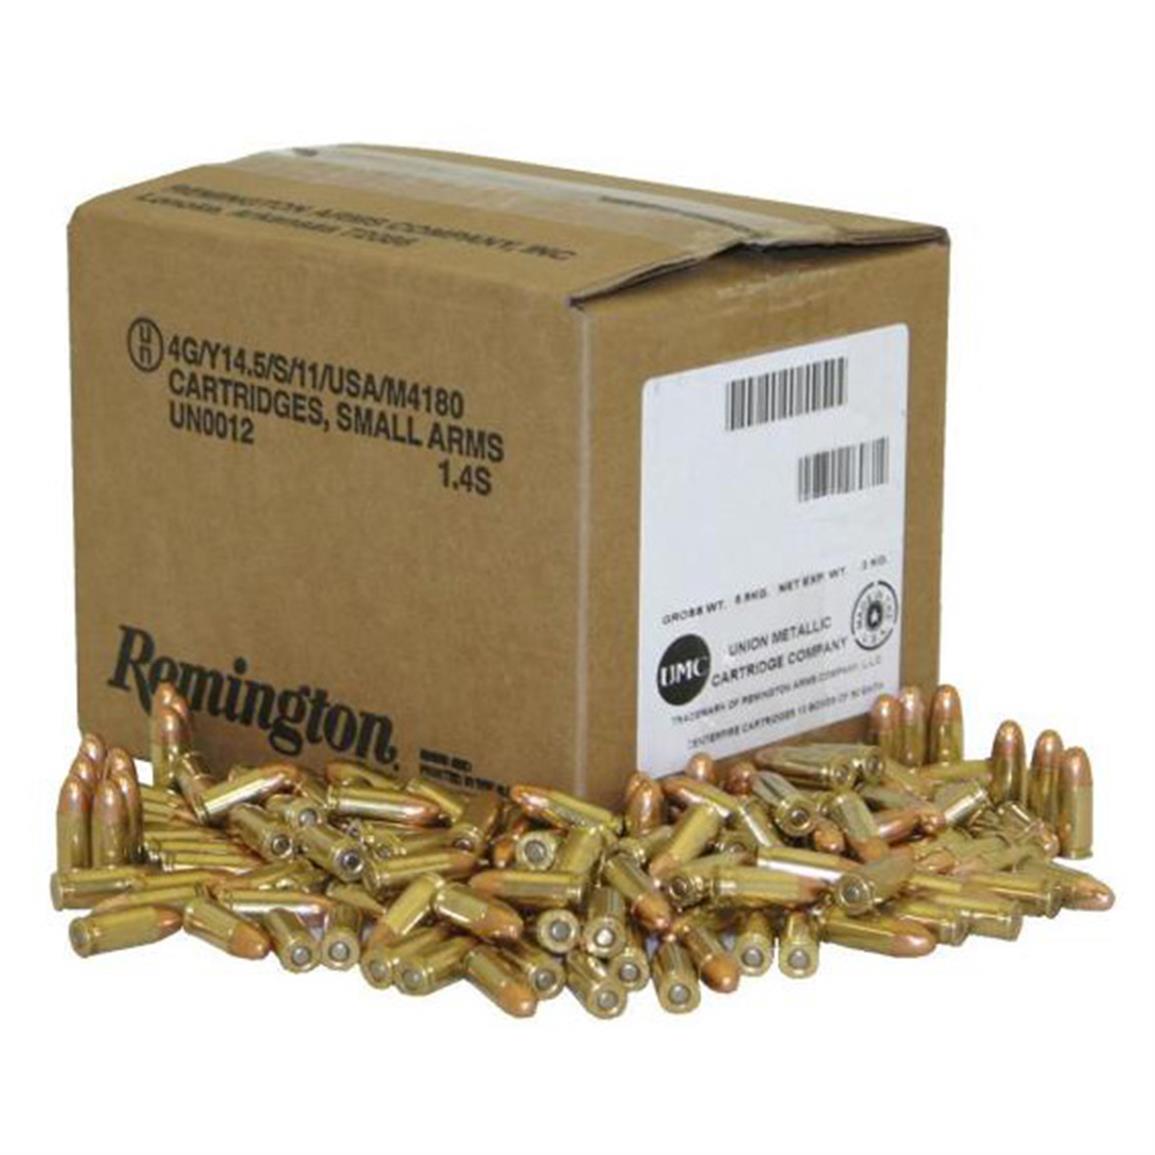 Remington UMC, 9mm, FMC, 115 Grain, 1,000 Rounds, Loose Bulk